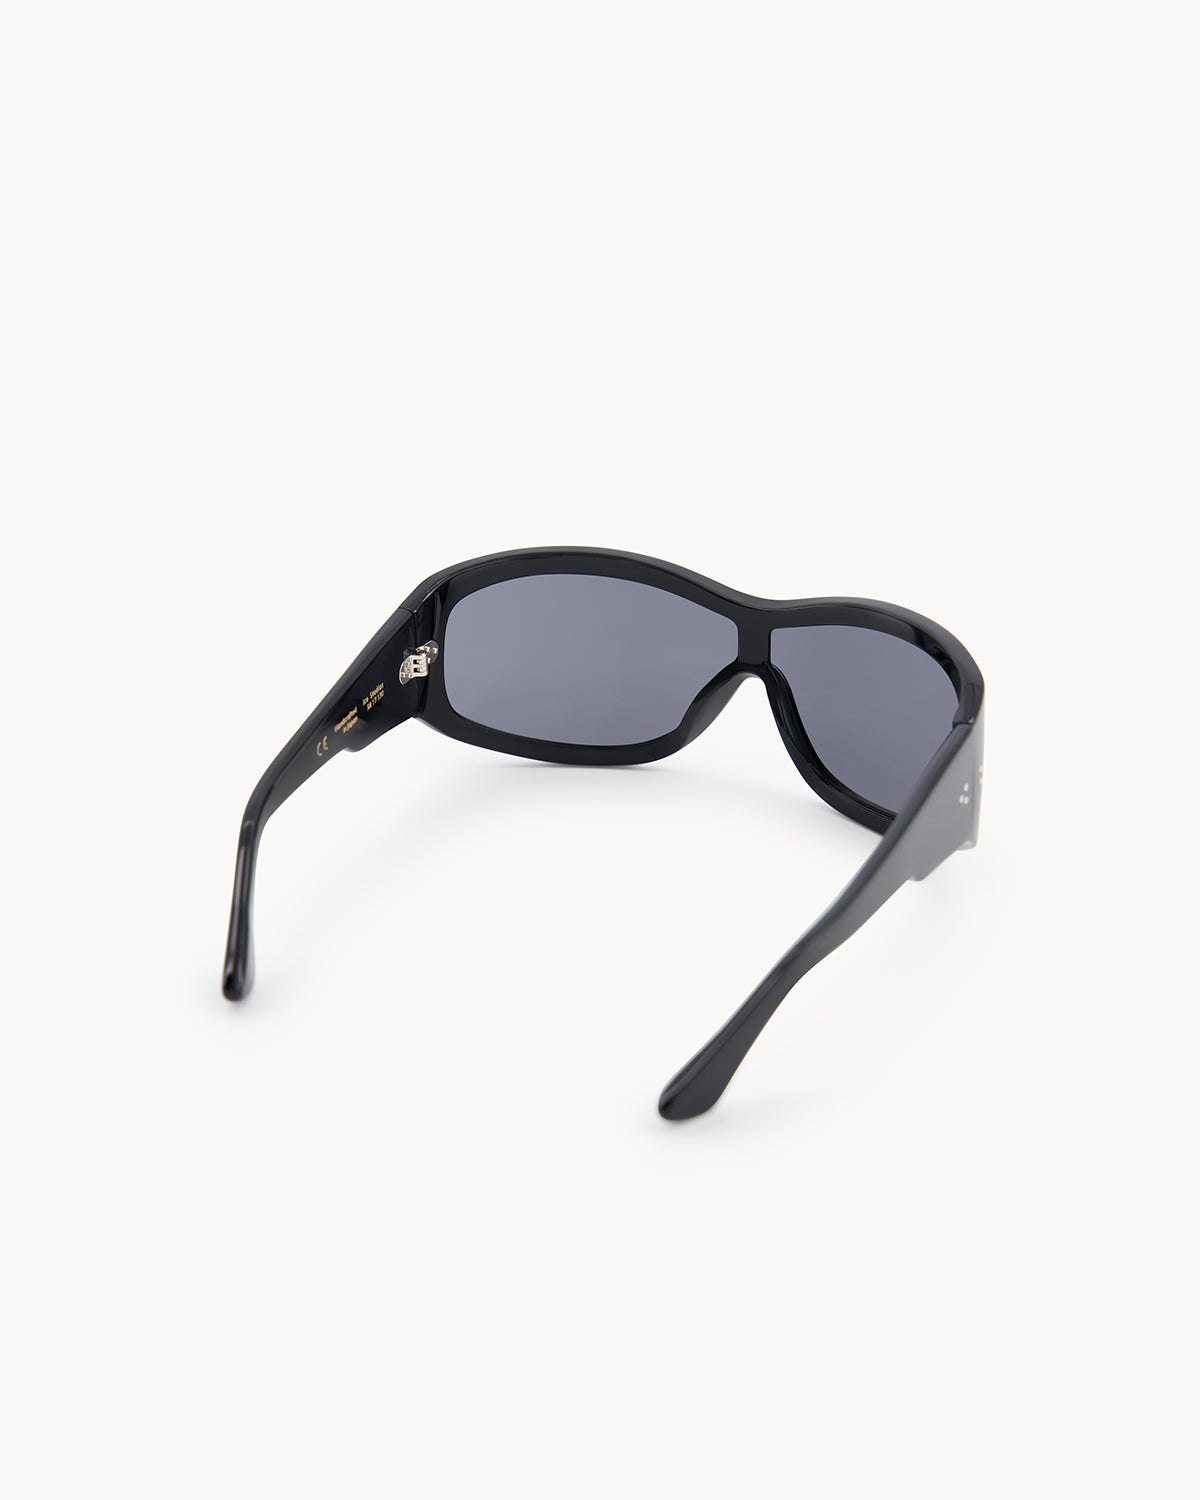 Port Tanger Nunny Sunglasses in Black Acetate and Black Lenses 3